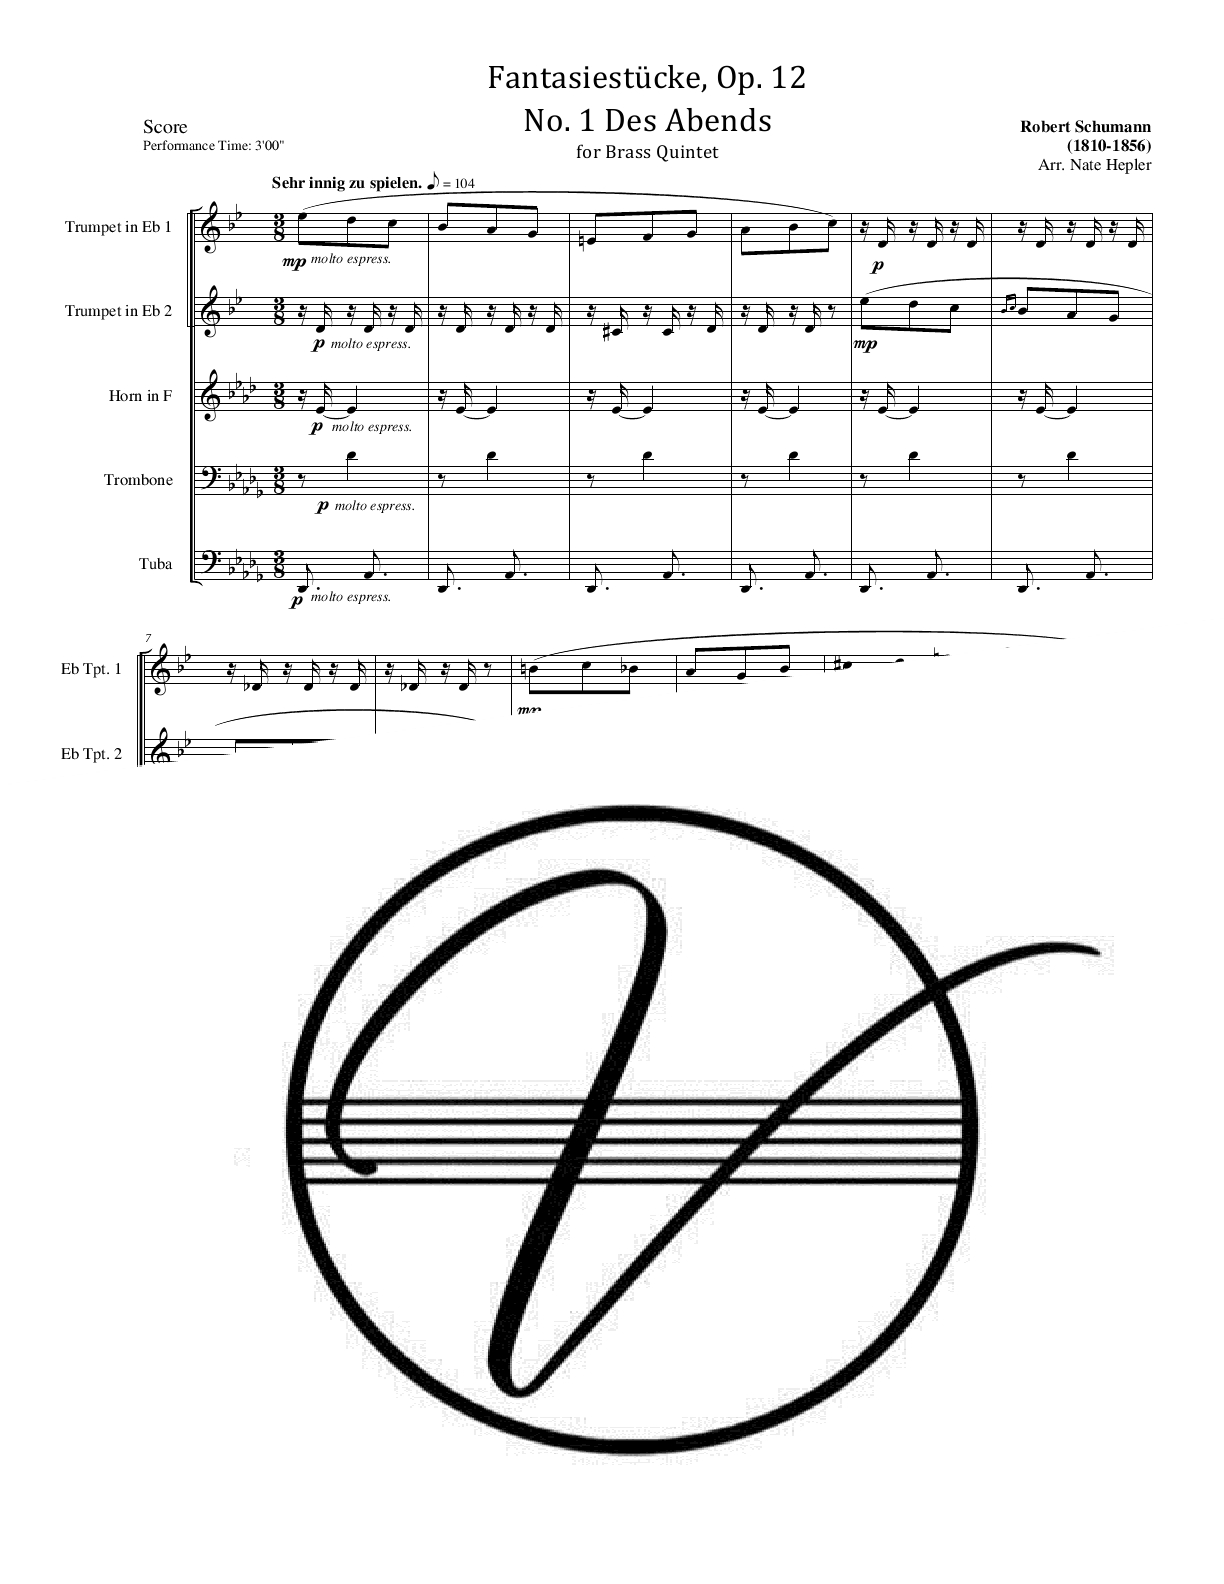 Schumann - Fantasiestucke, Op. 12, No. 1 - Des Abends (BQ) - Click Image to Close